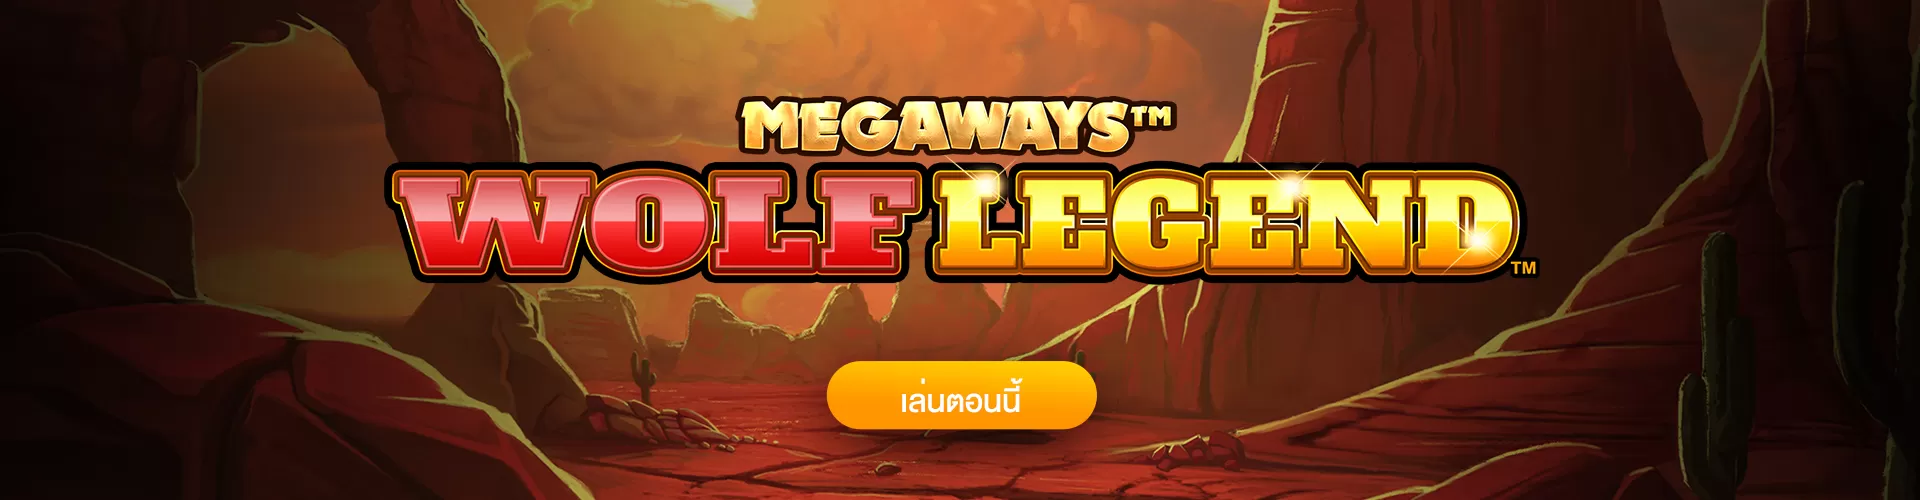 Wolf Legend Megaways รีวิวเกมสล็อตหมาป่าในตำนาน